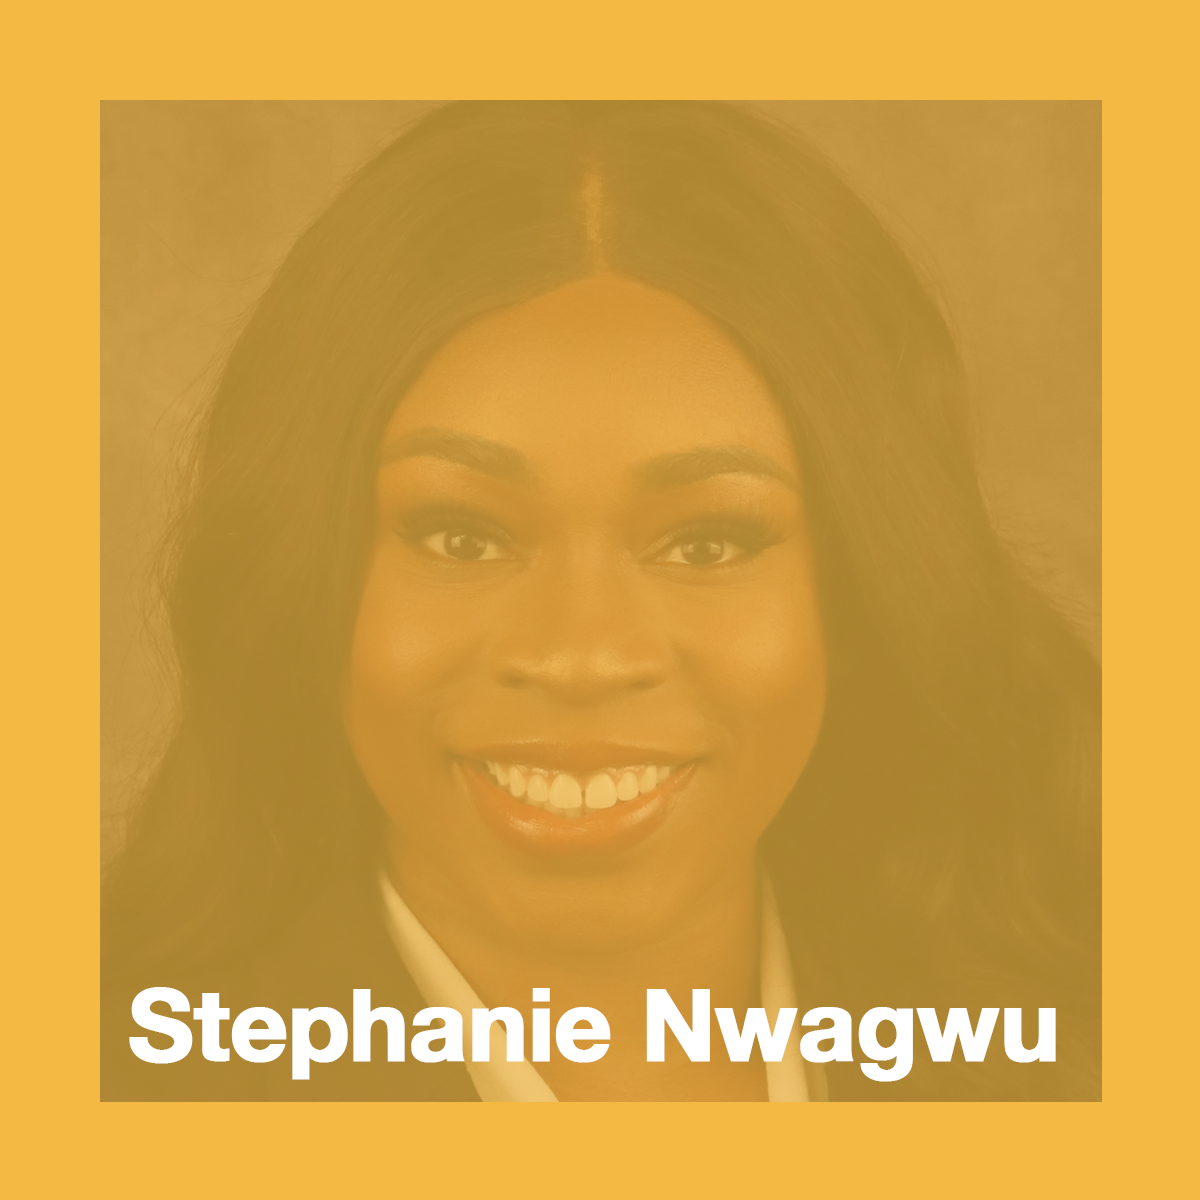 Stephanie Nwagwu, smiling at the camera. She is wearing a dark blazer and a white shirt.